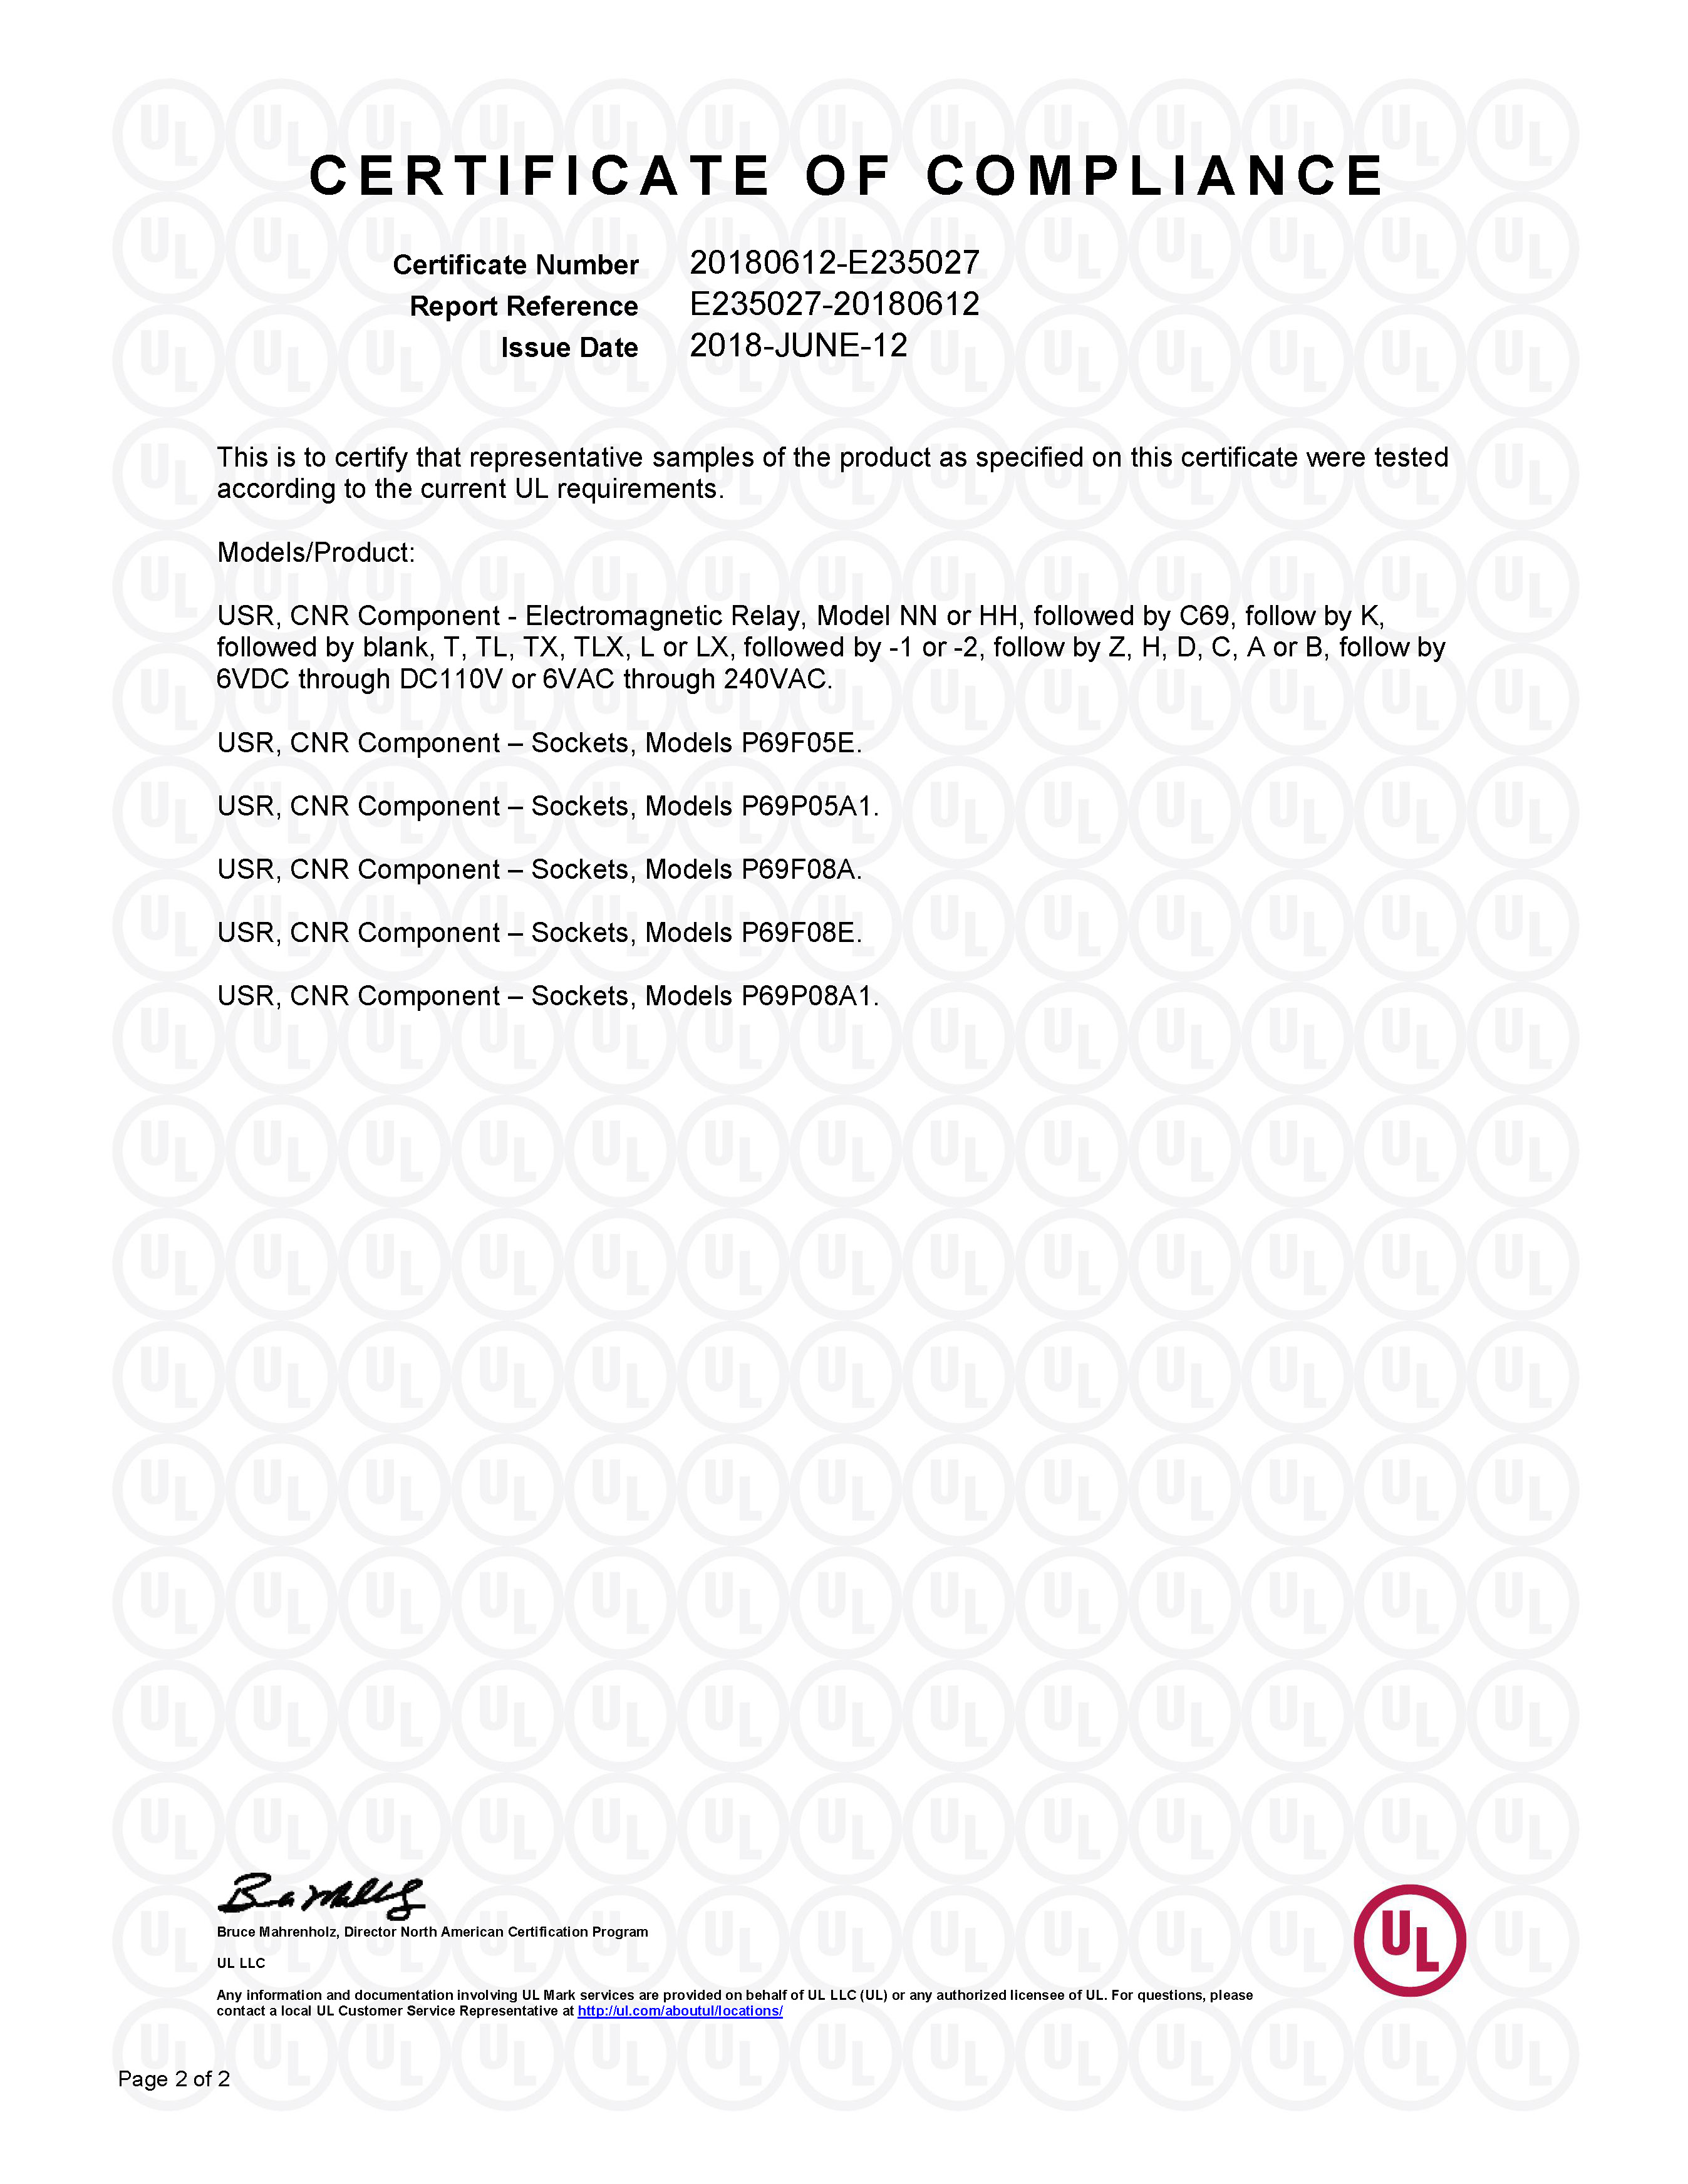 E235027-20180612-CertificateofCompliance_页面_2